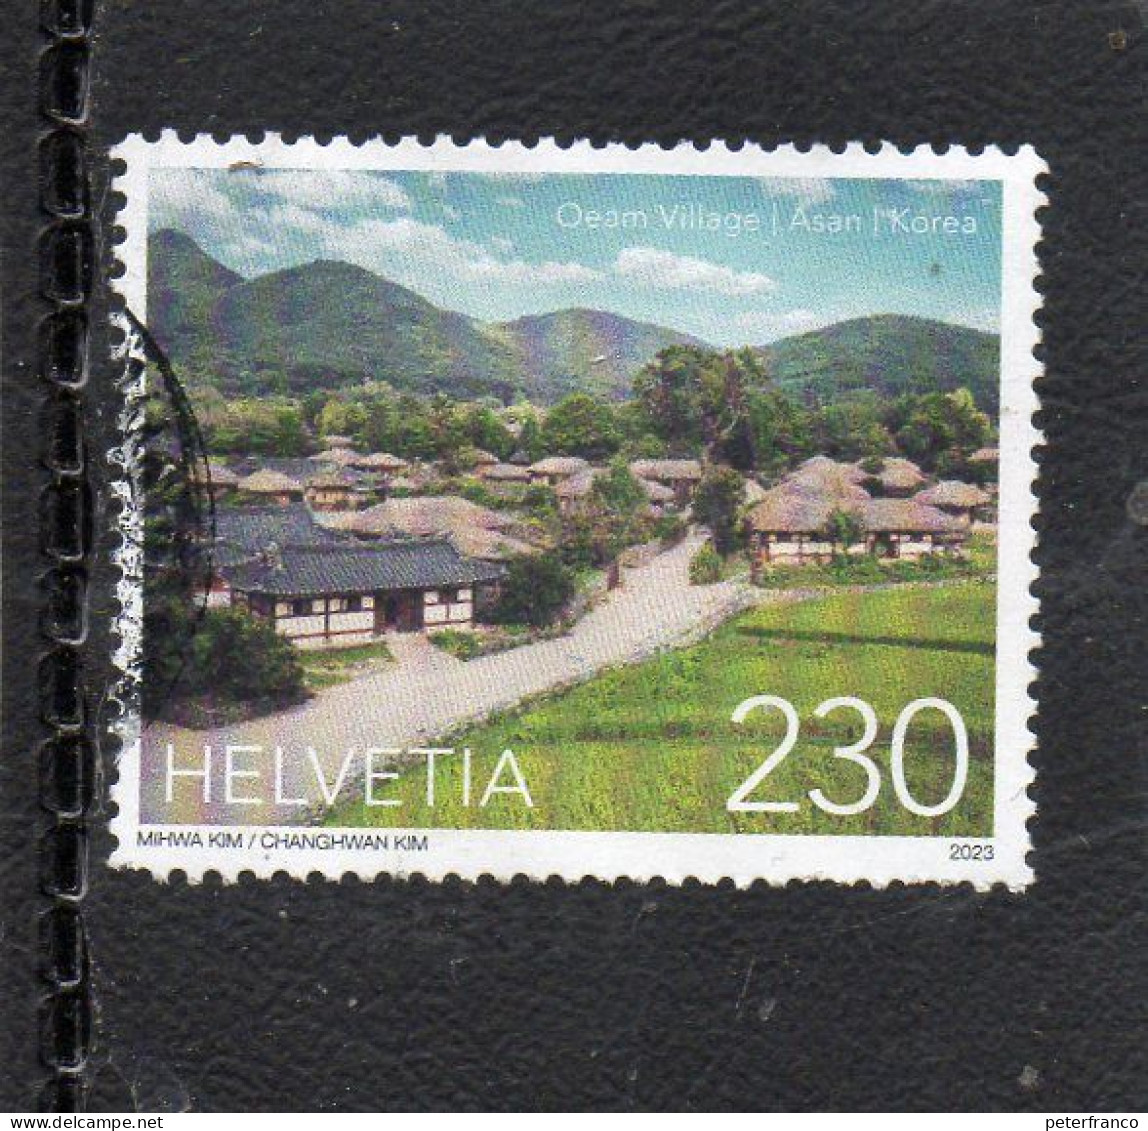 2023 Svizzera - Oeam Village,  Asam- Korea - Emissione Congiunta - Used Stamps